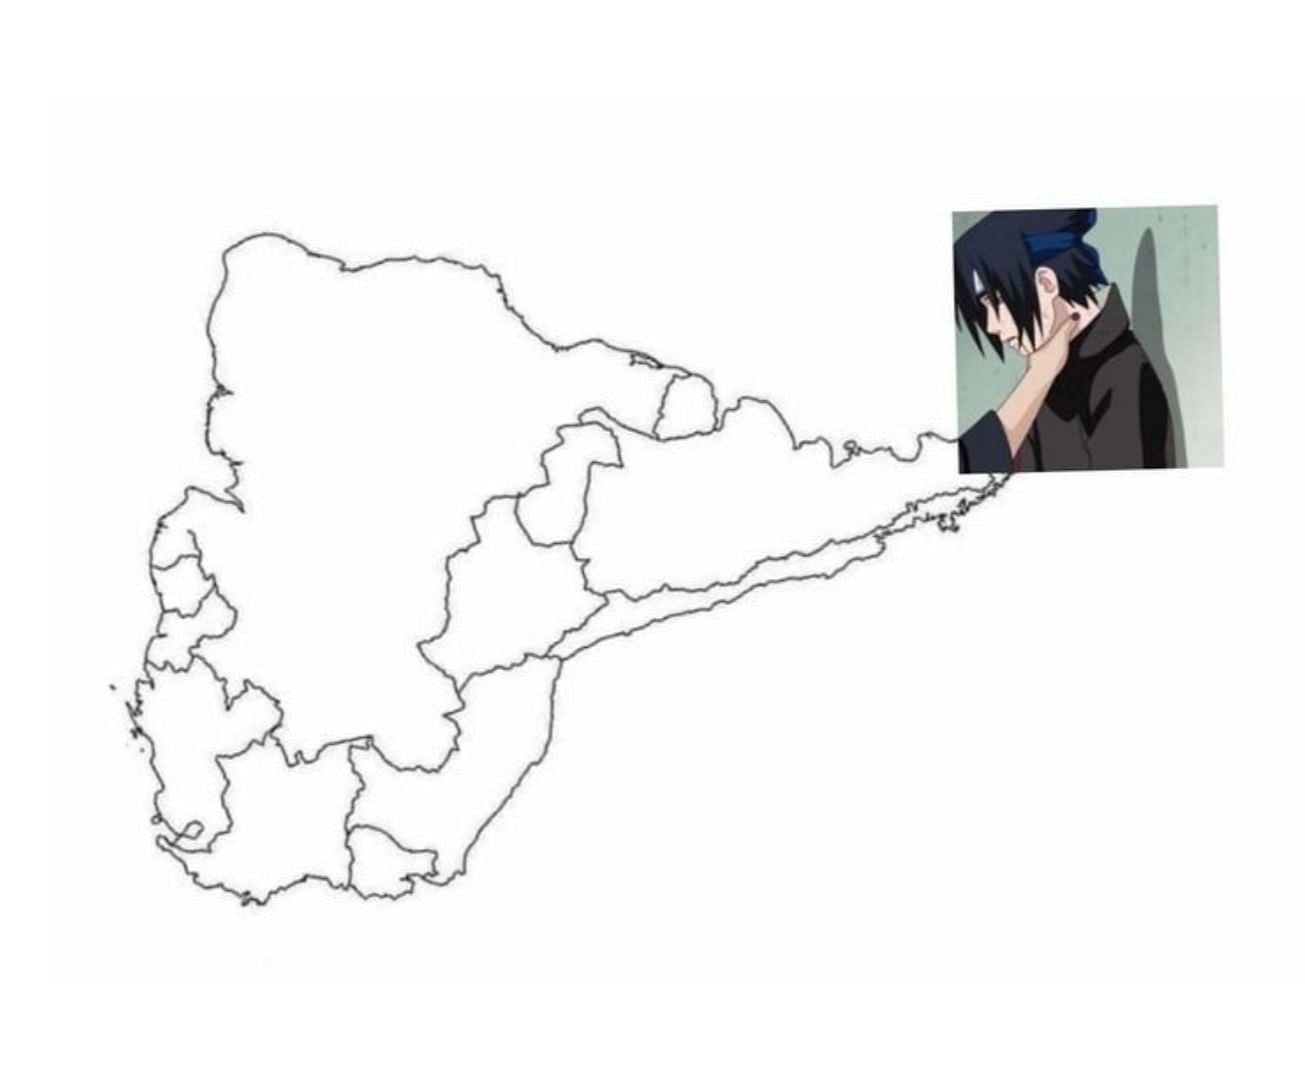 Choking Sasuke meme with South America's map (Image via Twitter)